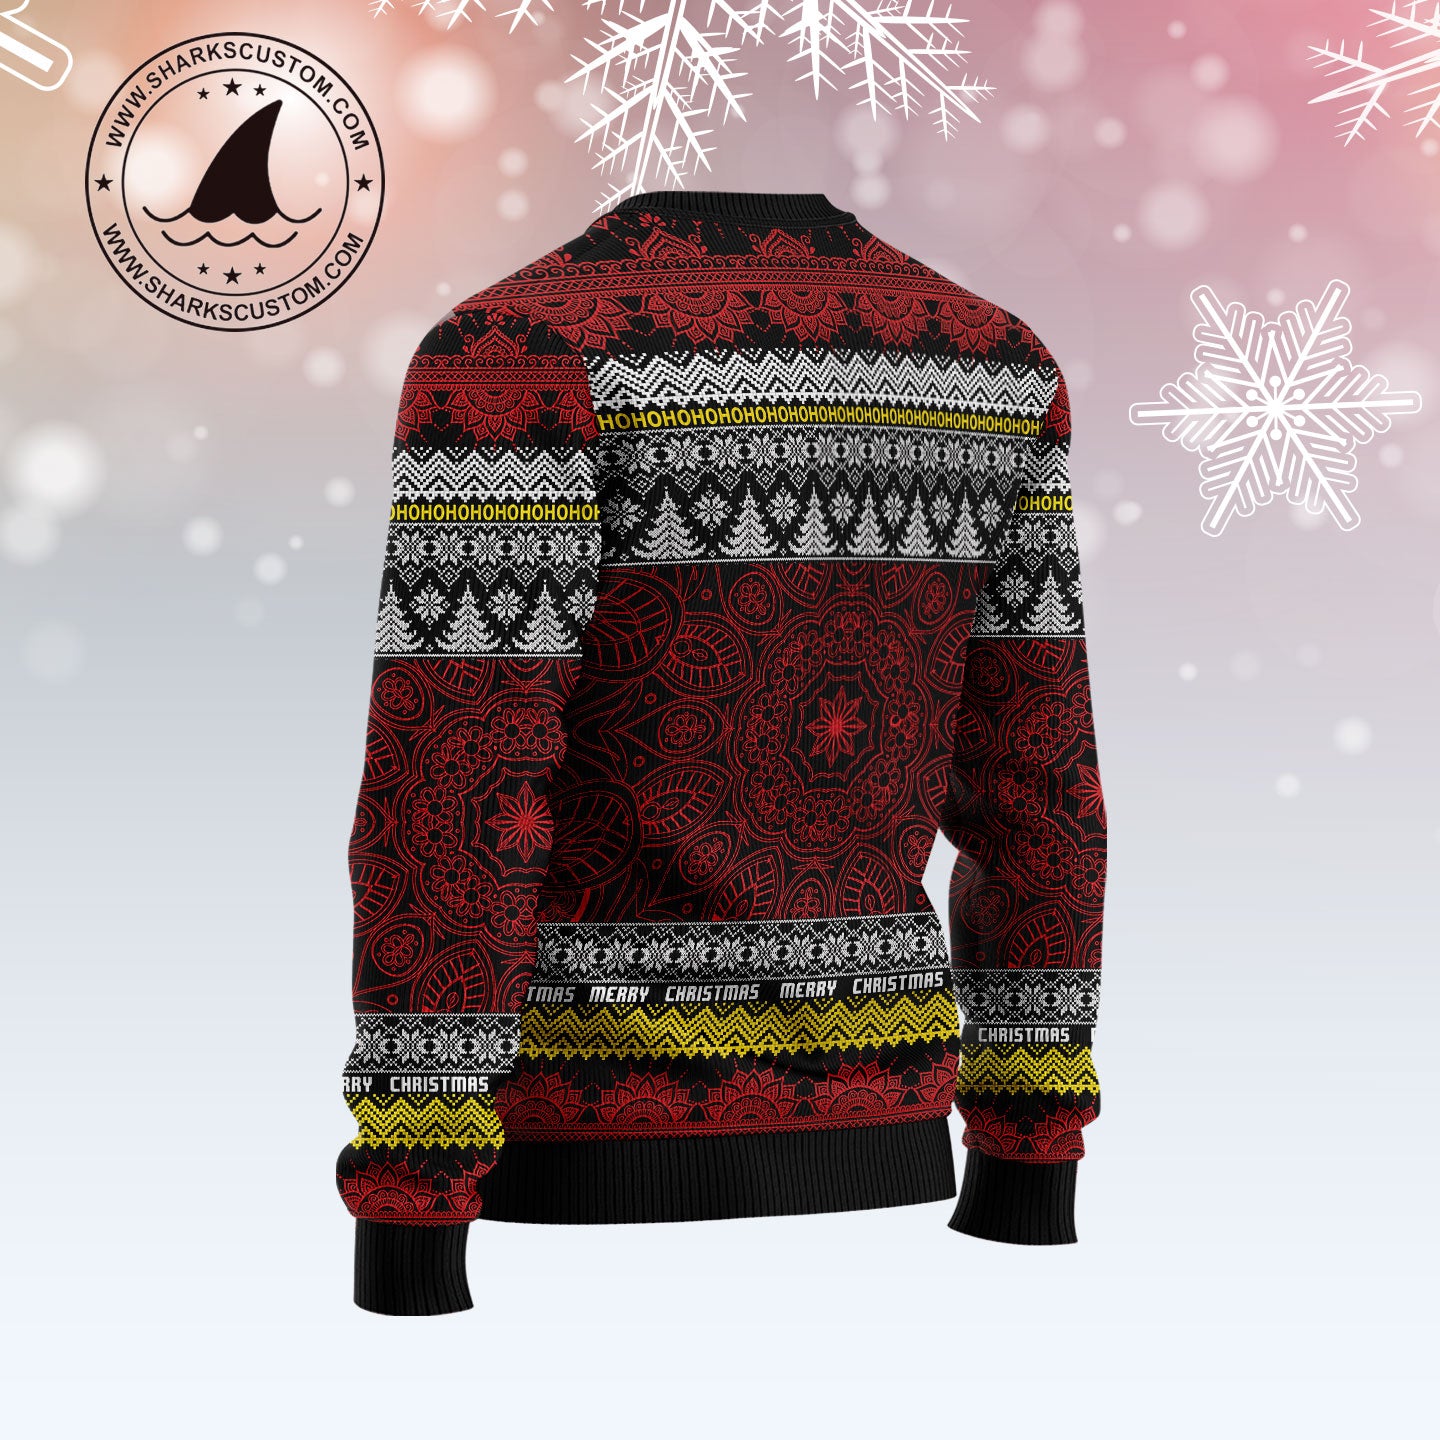 Texas Mandala D1011 Ugly Christmas Sweater